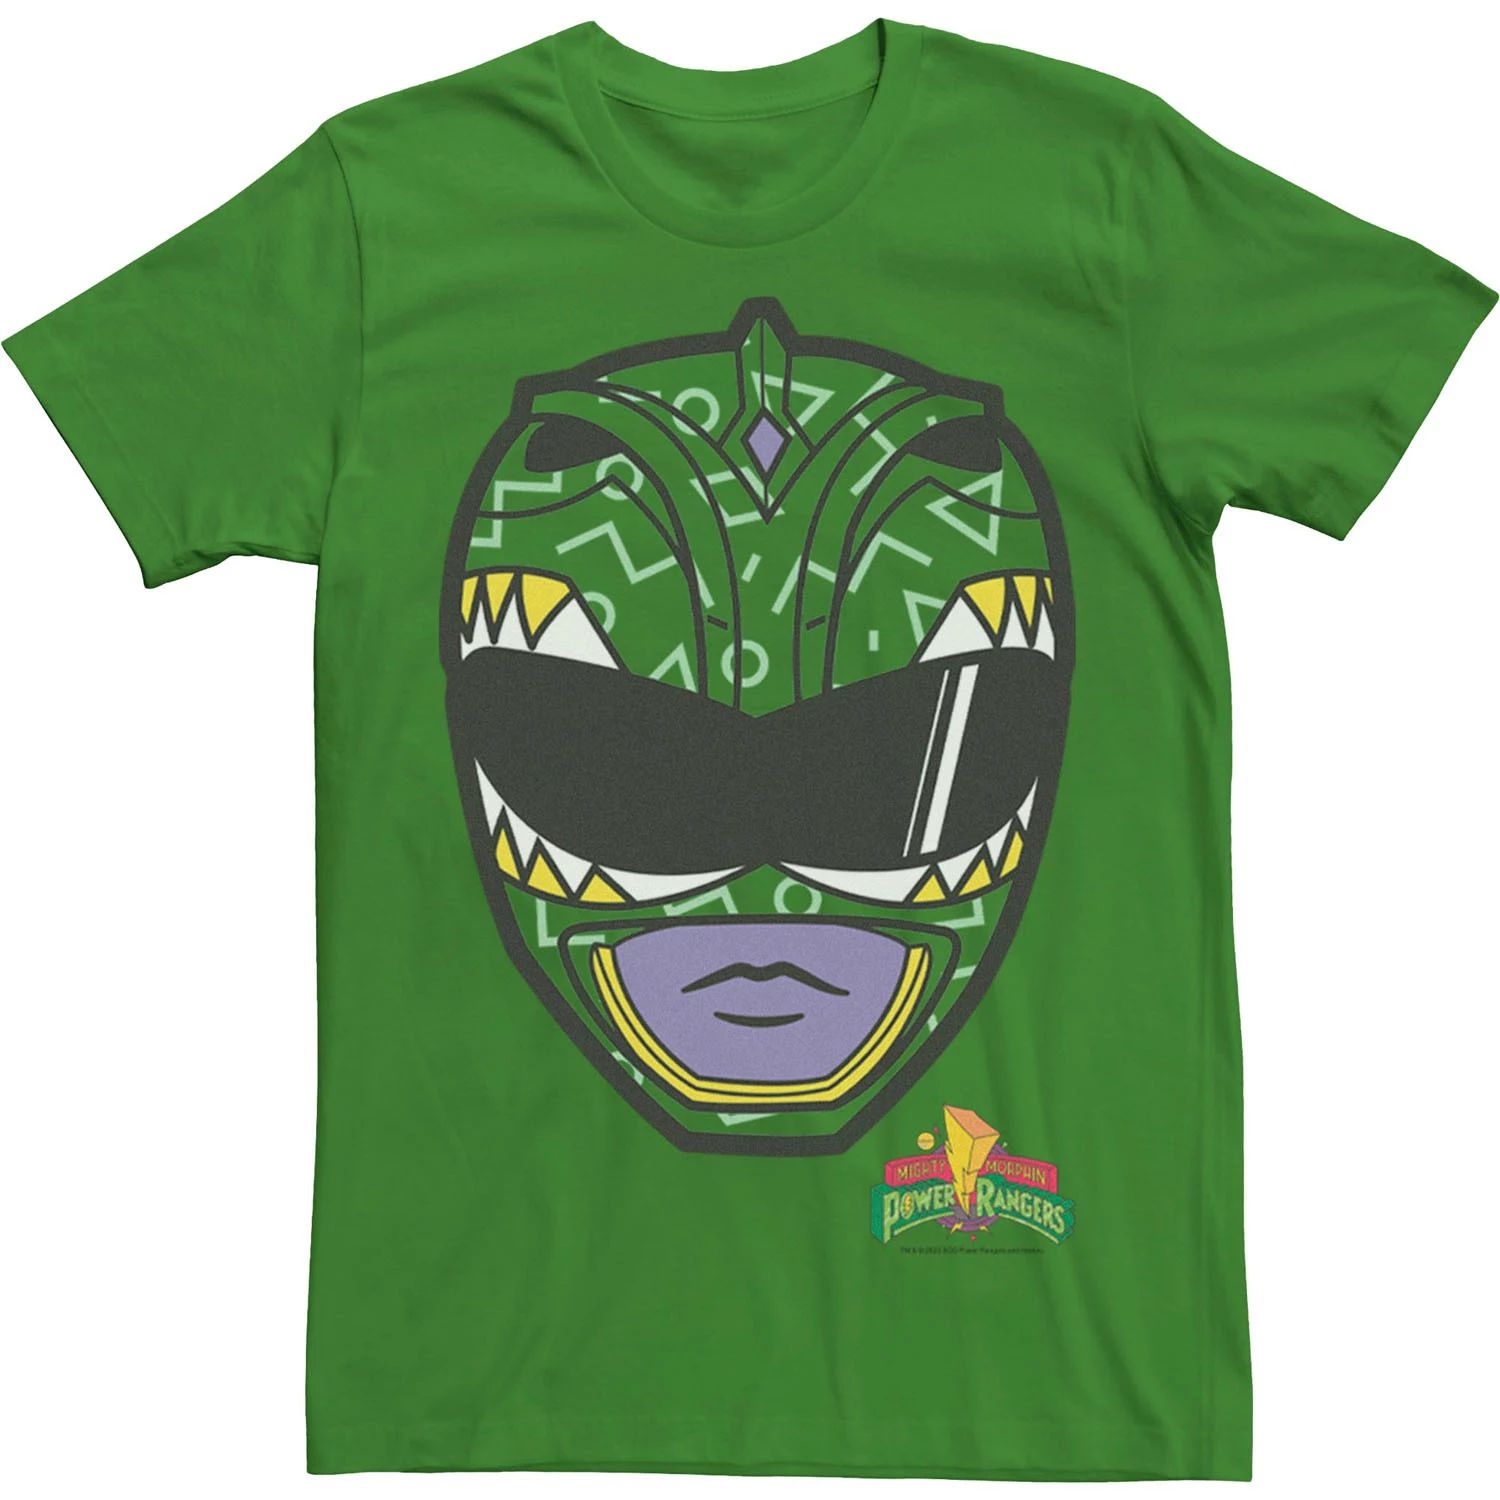 Мужская футболка Power Rangers Green Ranger с большим лицом Licensed Character